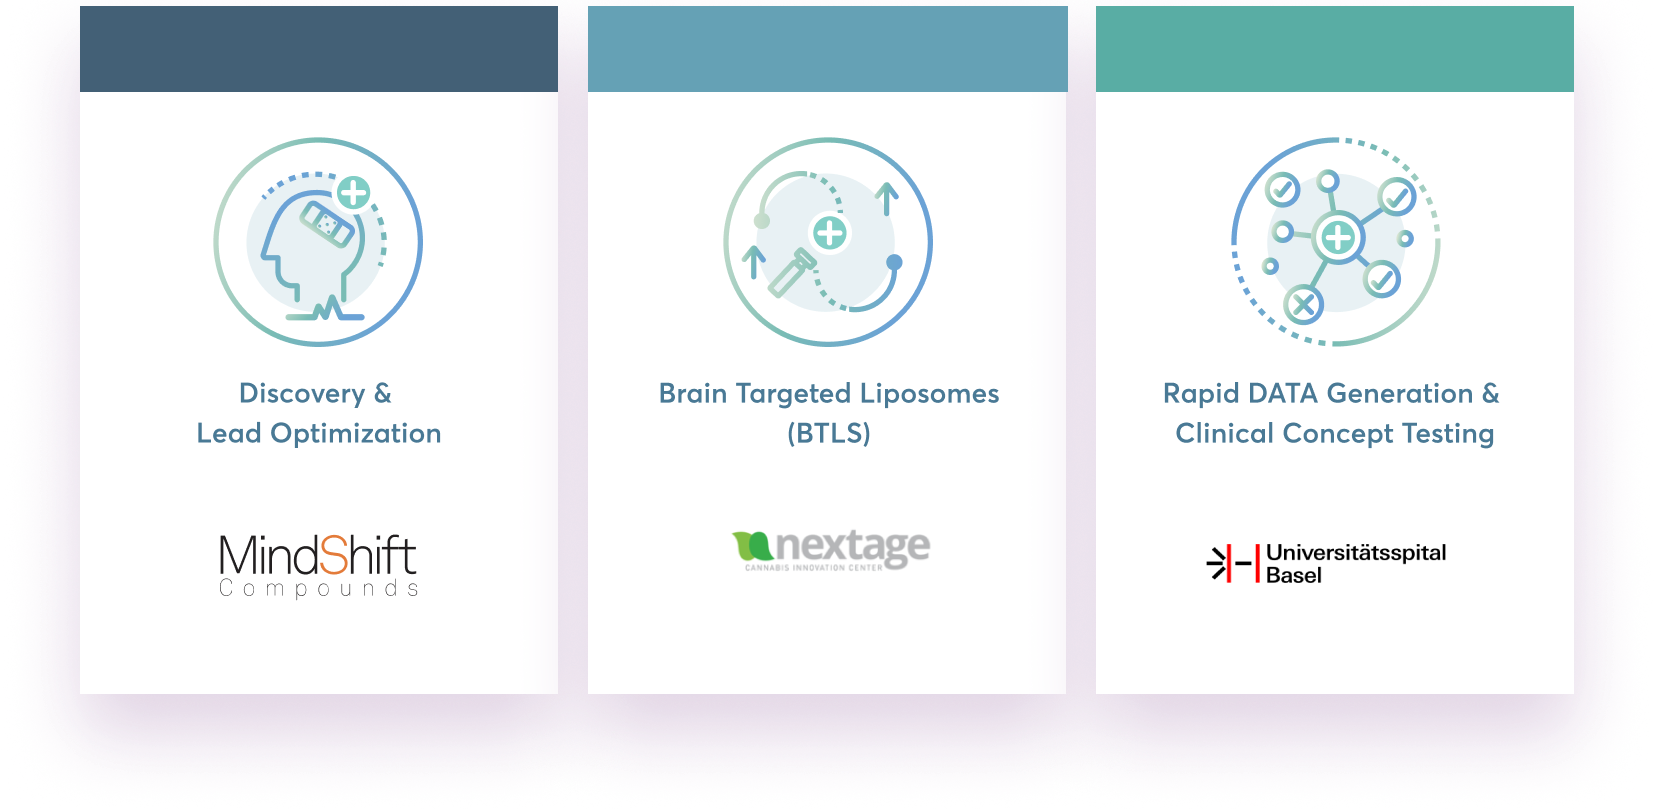 MindShift: Discovery &amp; Lead Optimization. nextage: Brain Targeted Liposomes (BTLS). Universitätsspital Bassel: Rapid DATA Generation &amp; Clinical Concept Testing